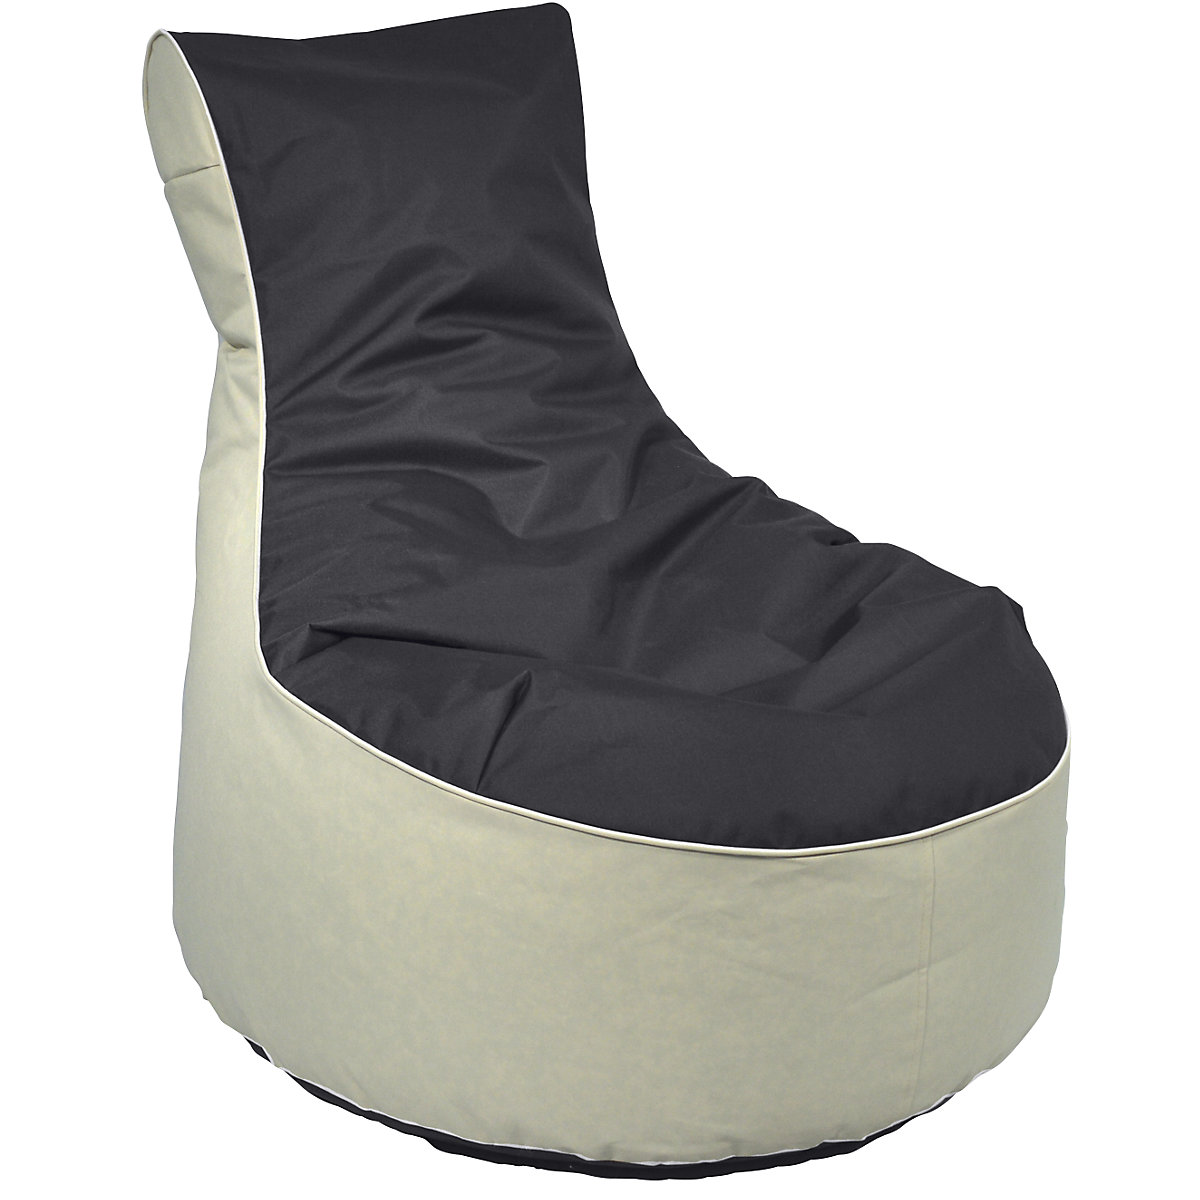 Zitzak-fauteuil, h x b x d = 900 x 800 x 800 mm, beige / antraciet-8